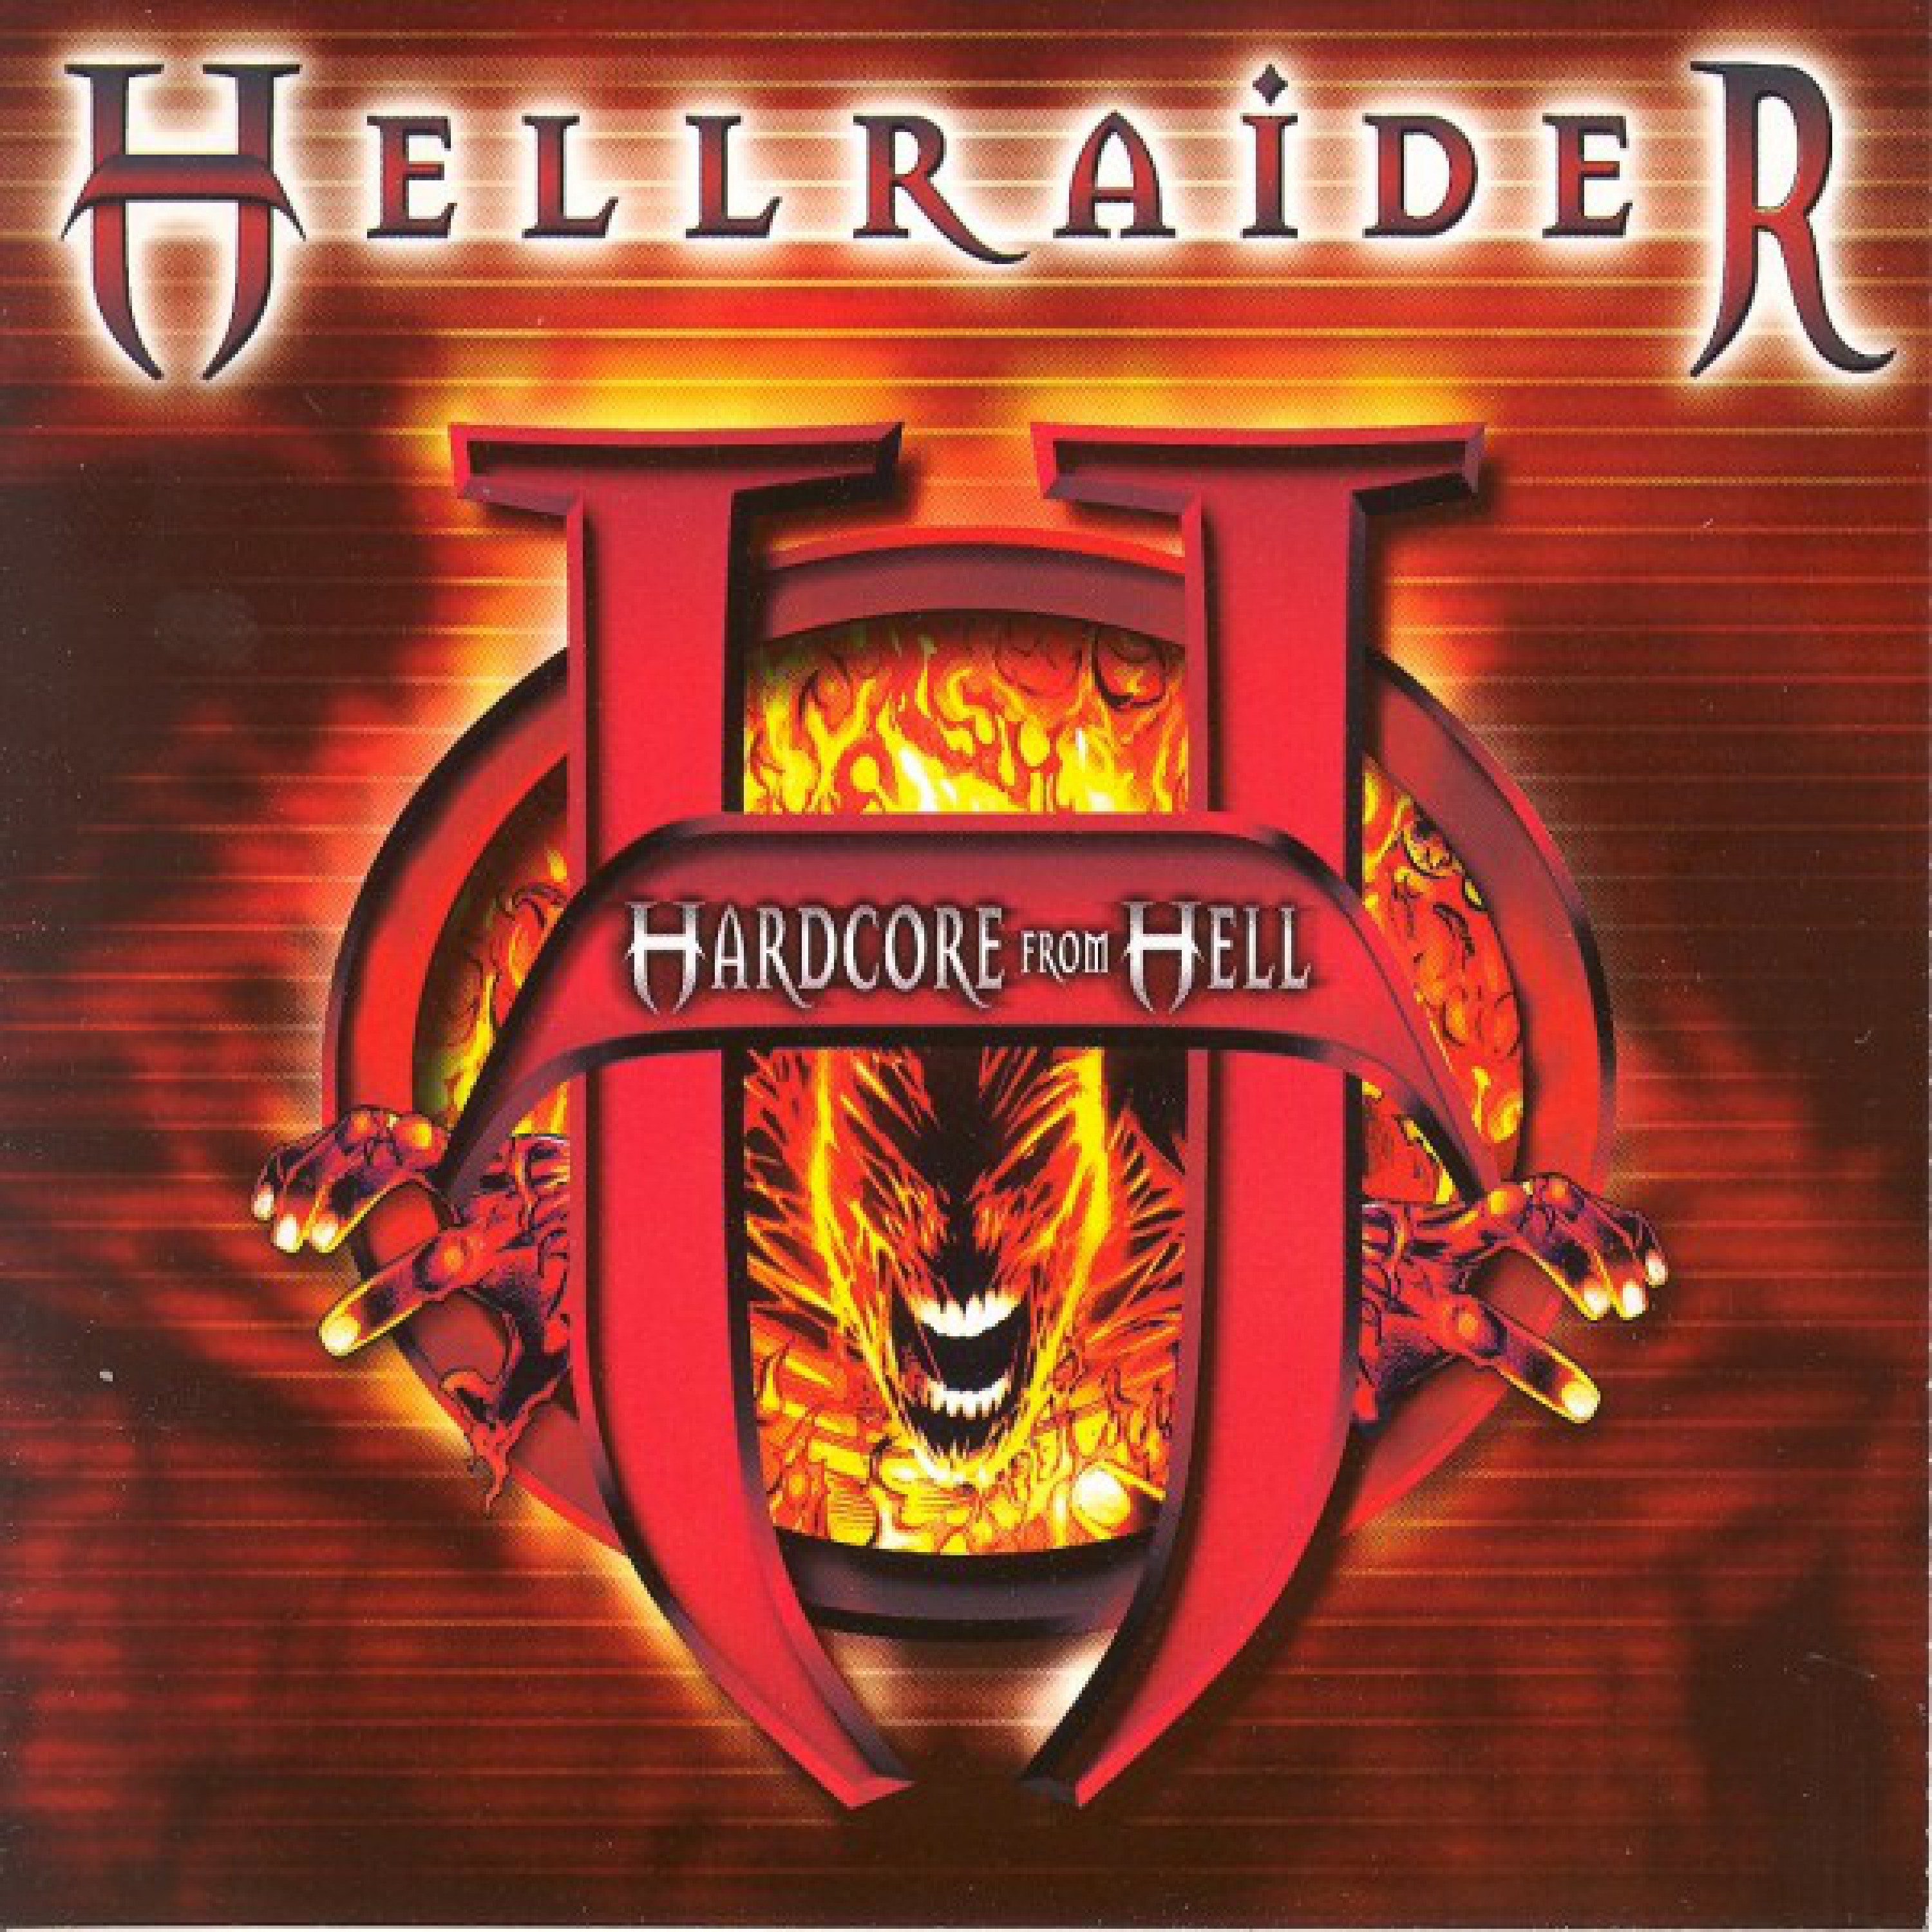 Hellraider (Hardcore from Hell)